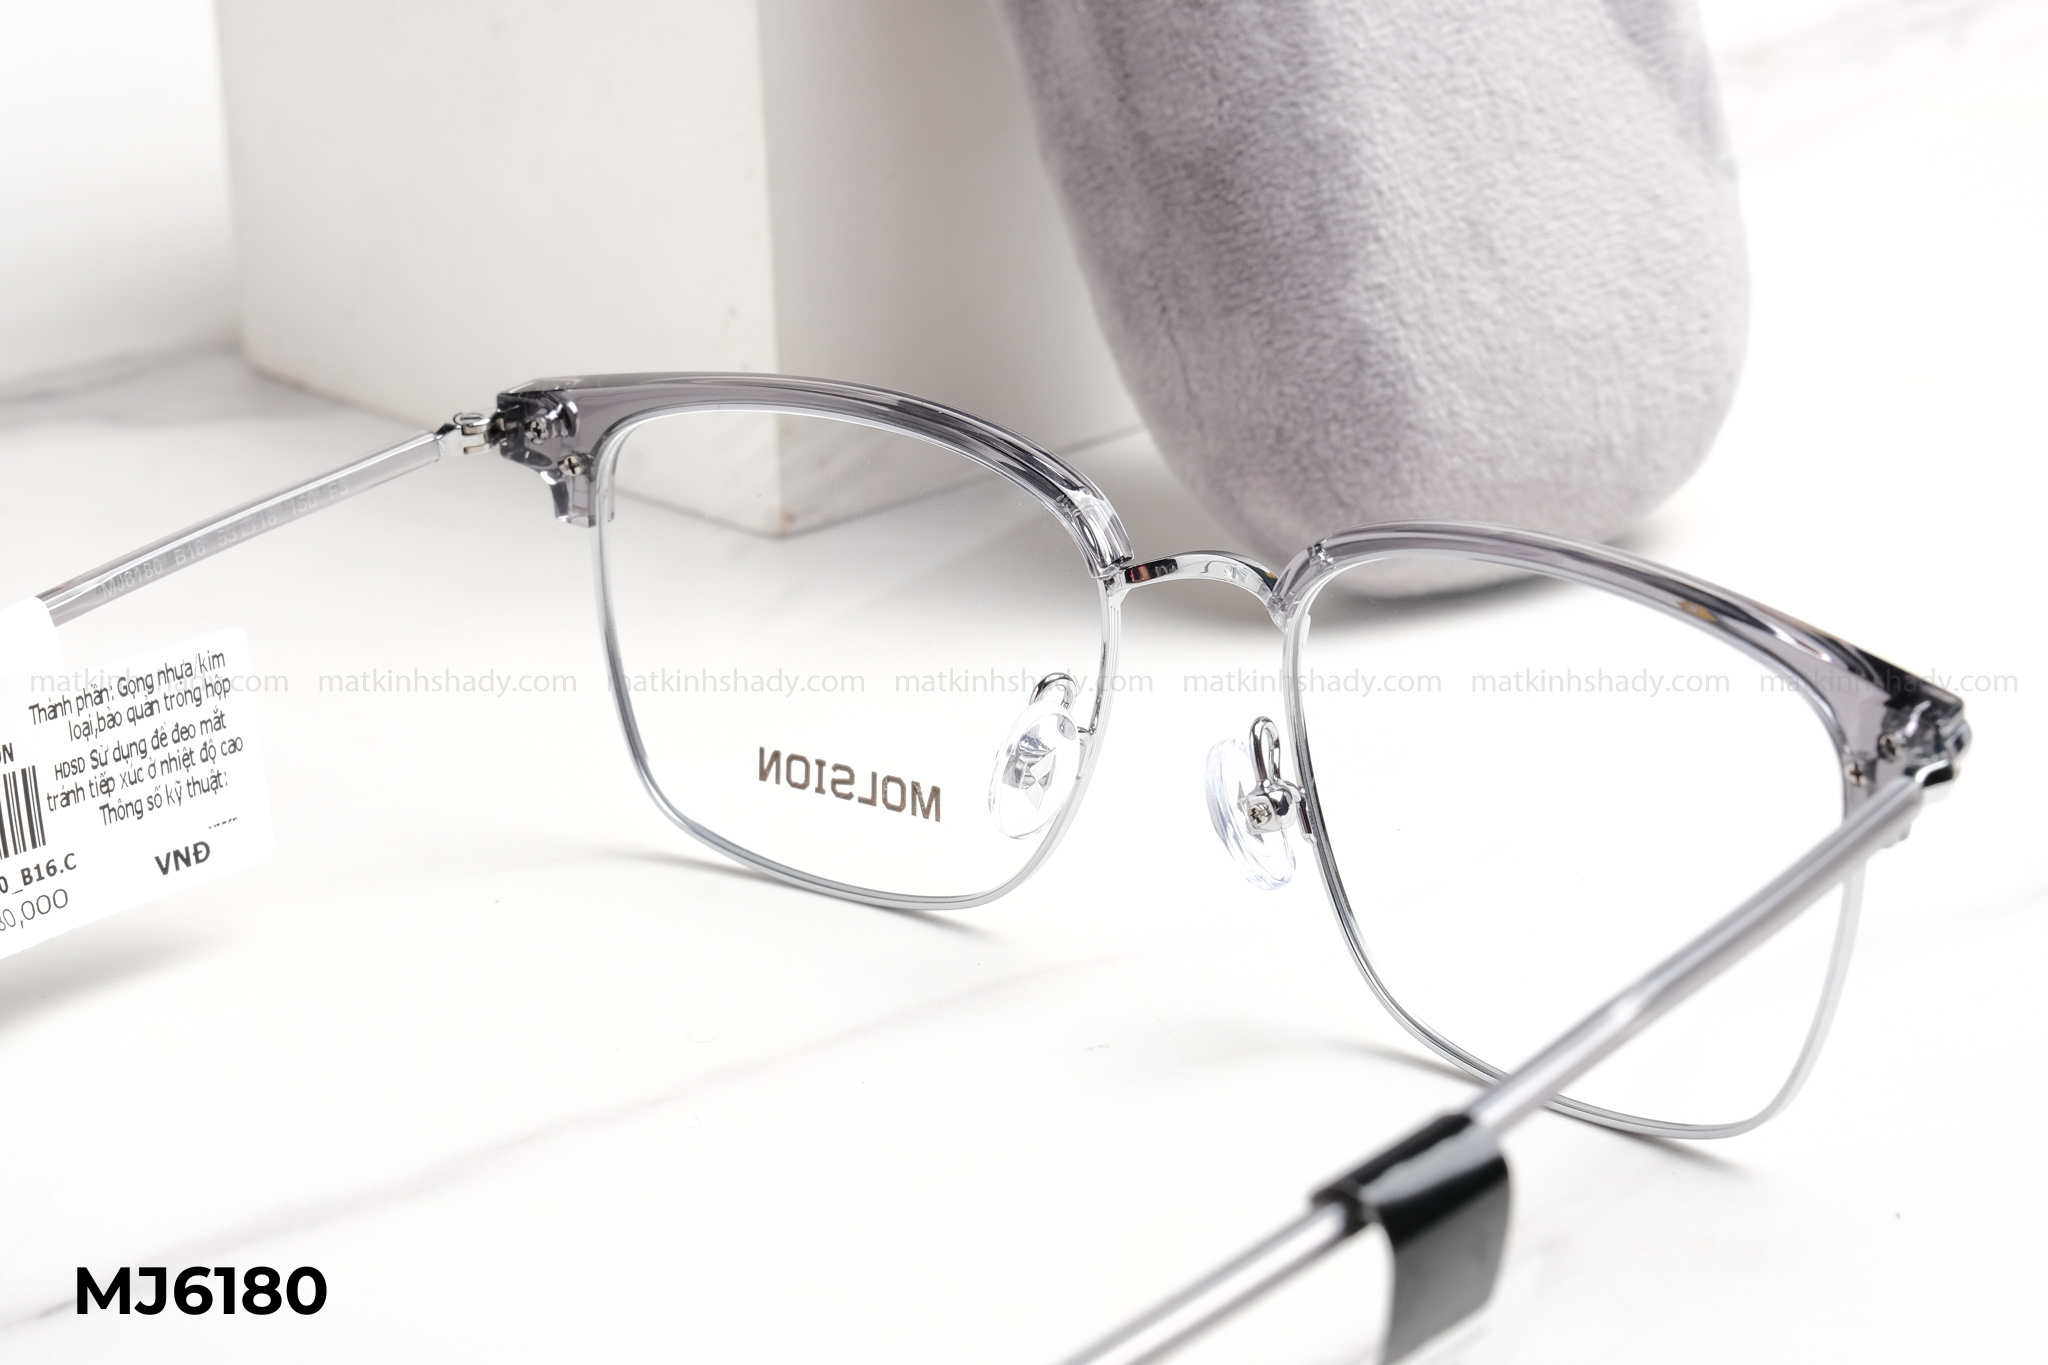  Molsion Eyewear - Glasses - MJ6180 